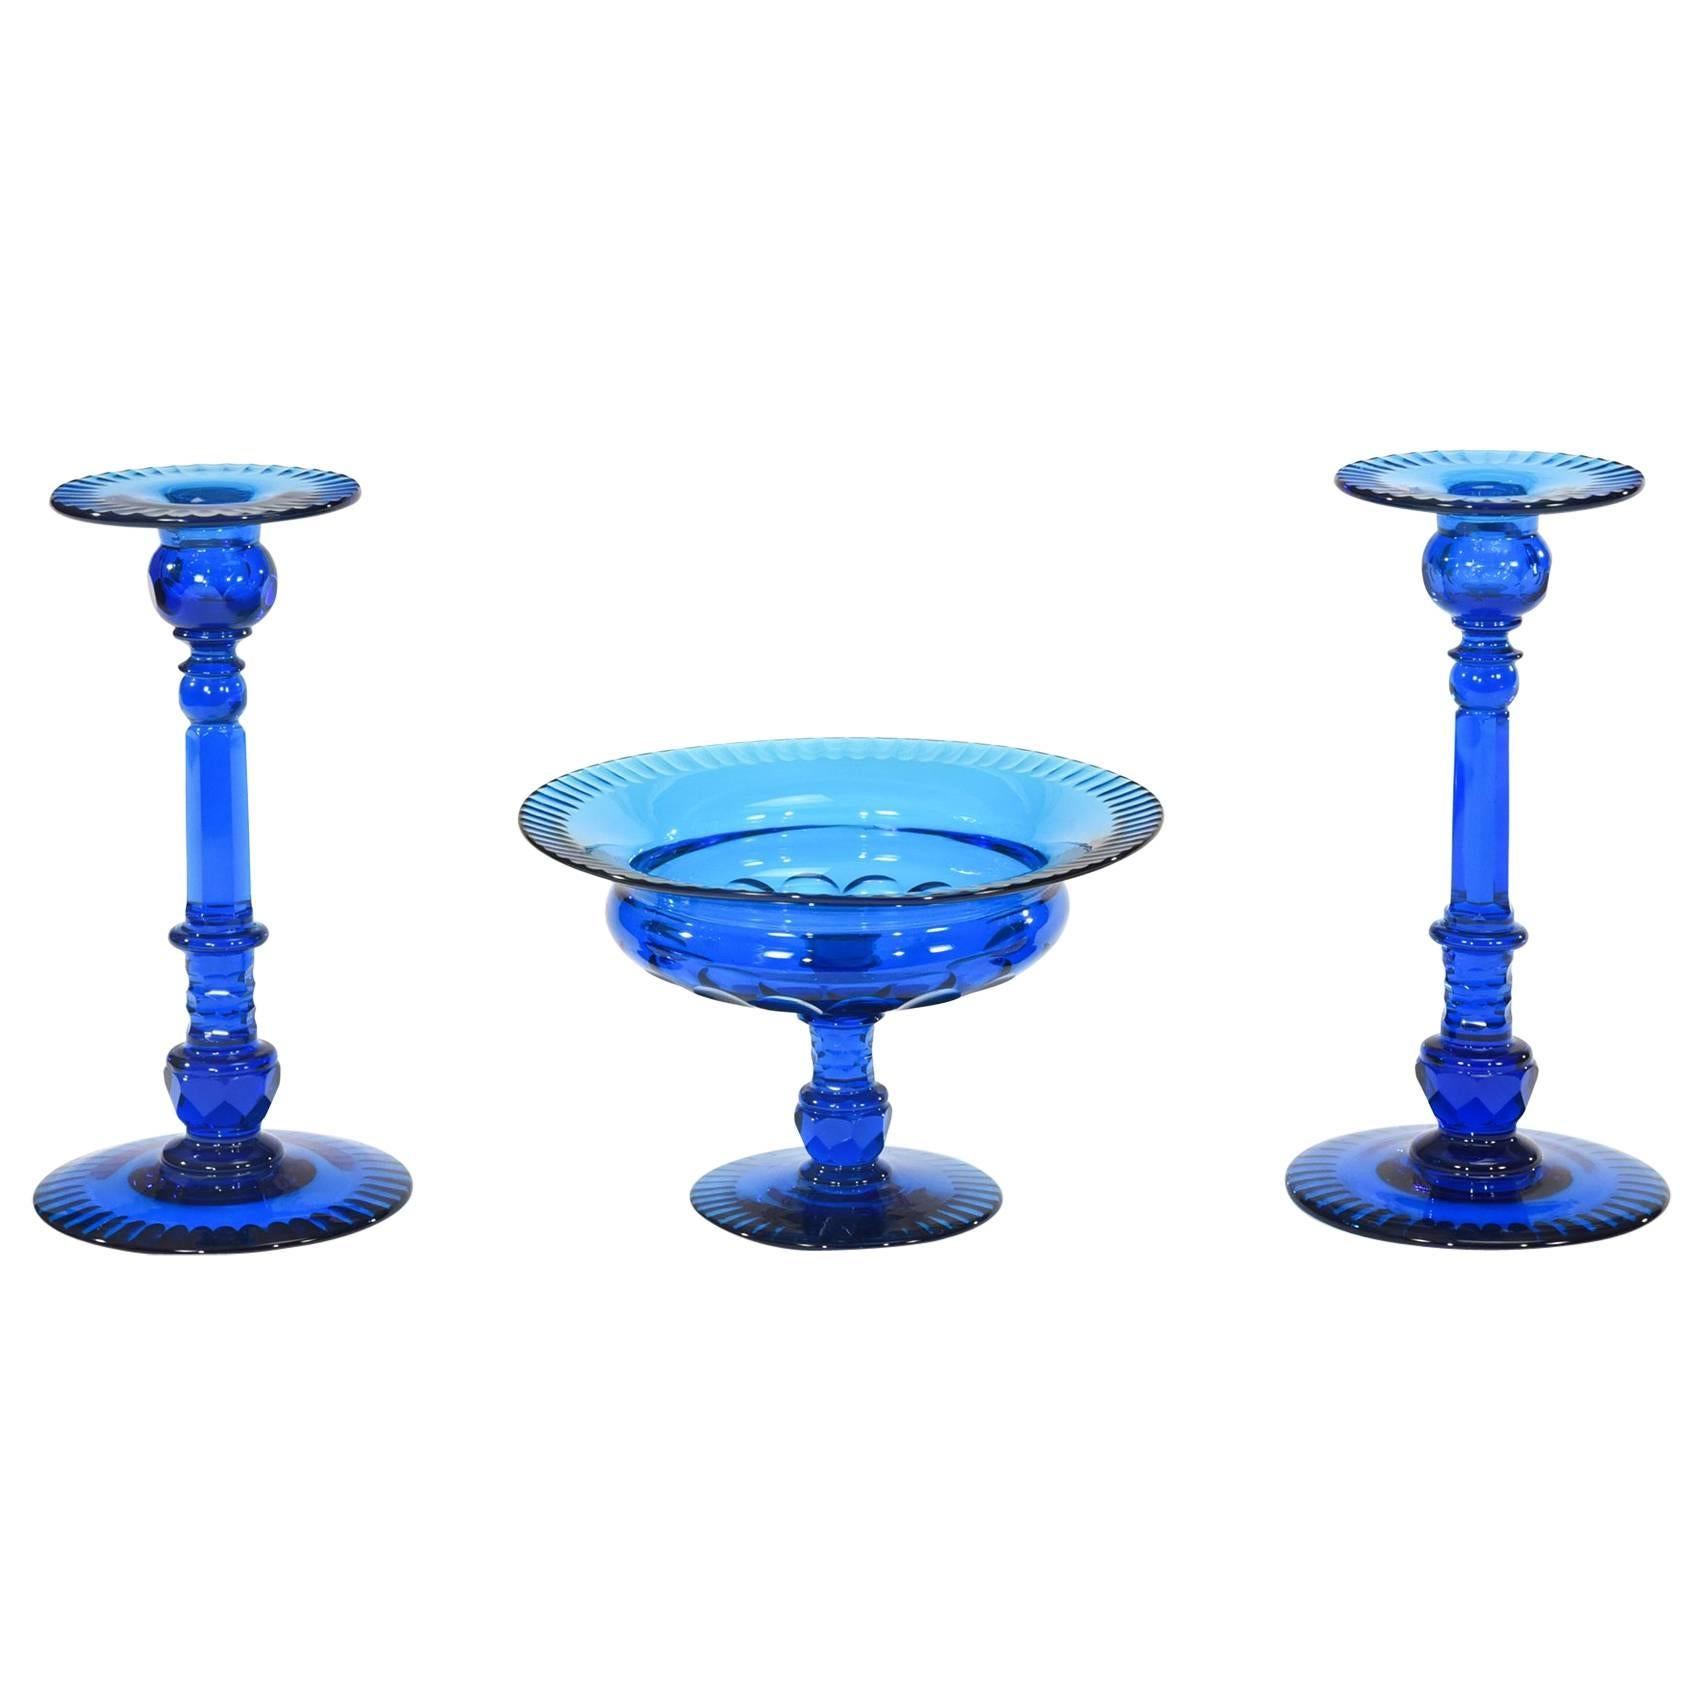 Steuben "Celeste Blue" Cut Crystal Centerpiece Set Candlesticks & Bowl For Sale